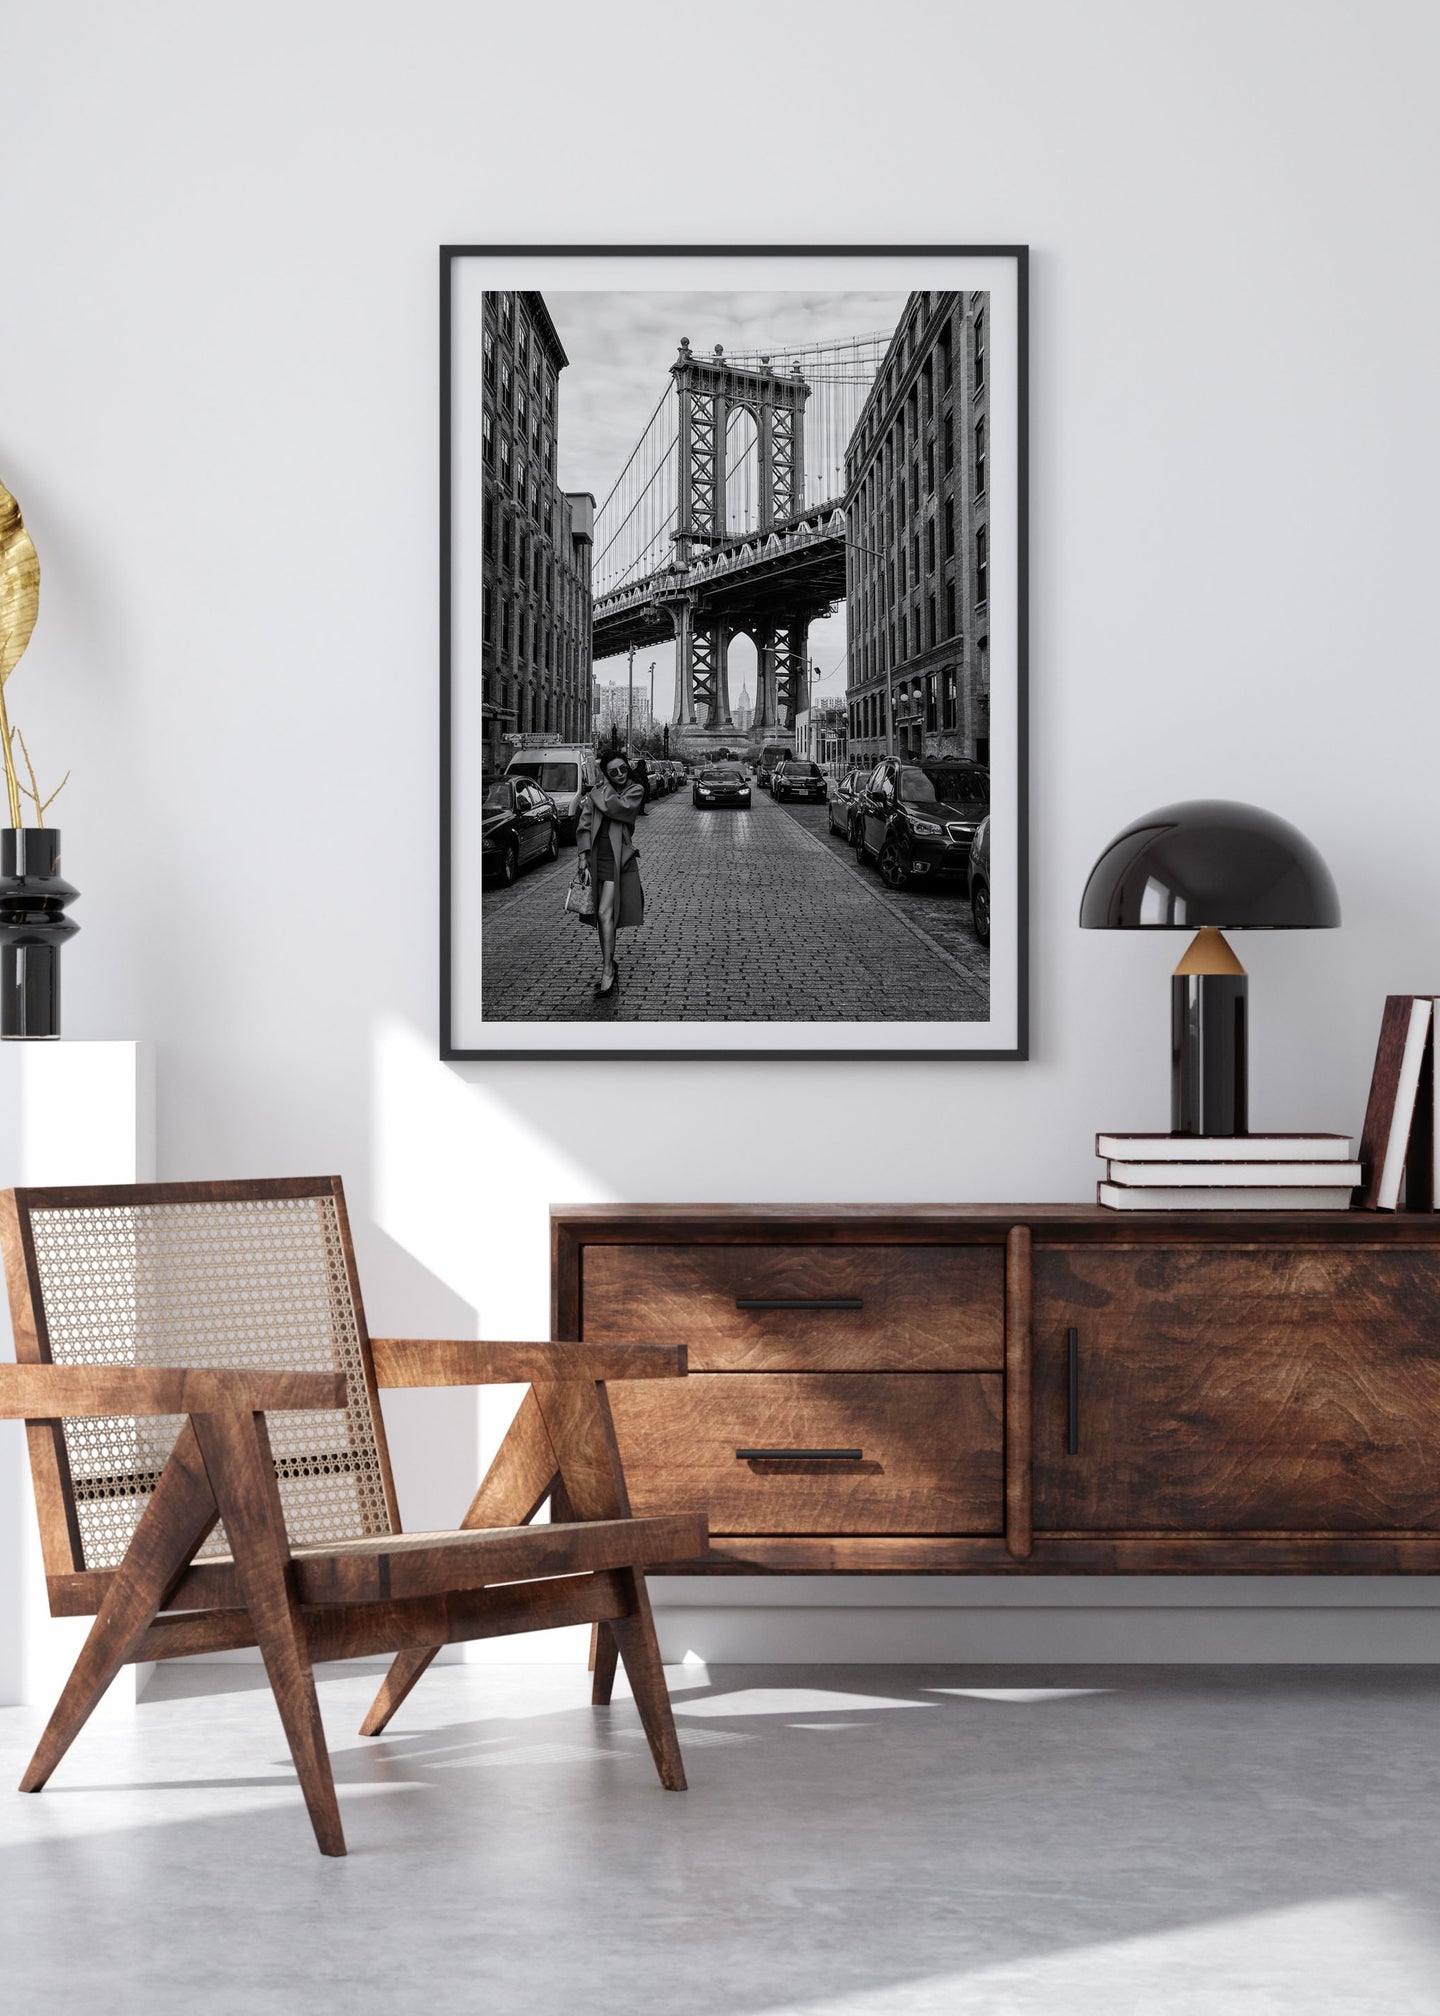 Oblivious by Robert Bolton | Black & White Brooklyn Bridge | USA Photographic Wall Art